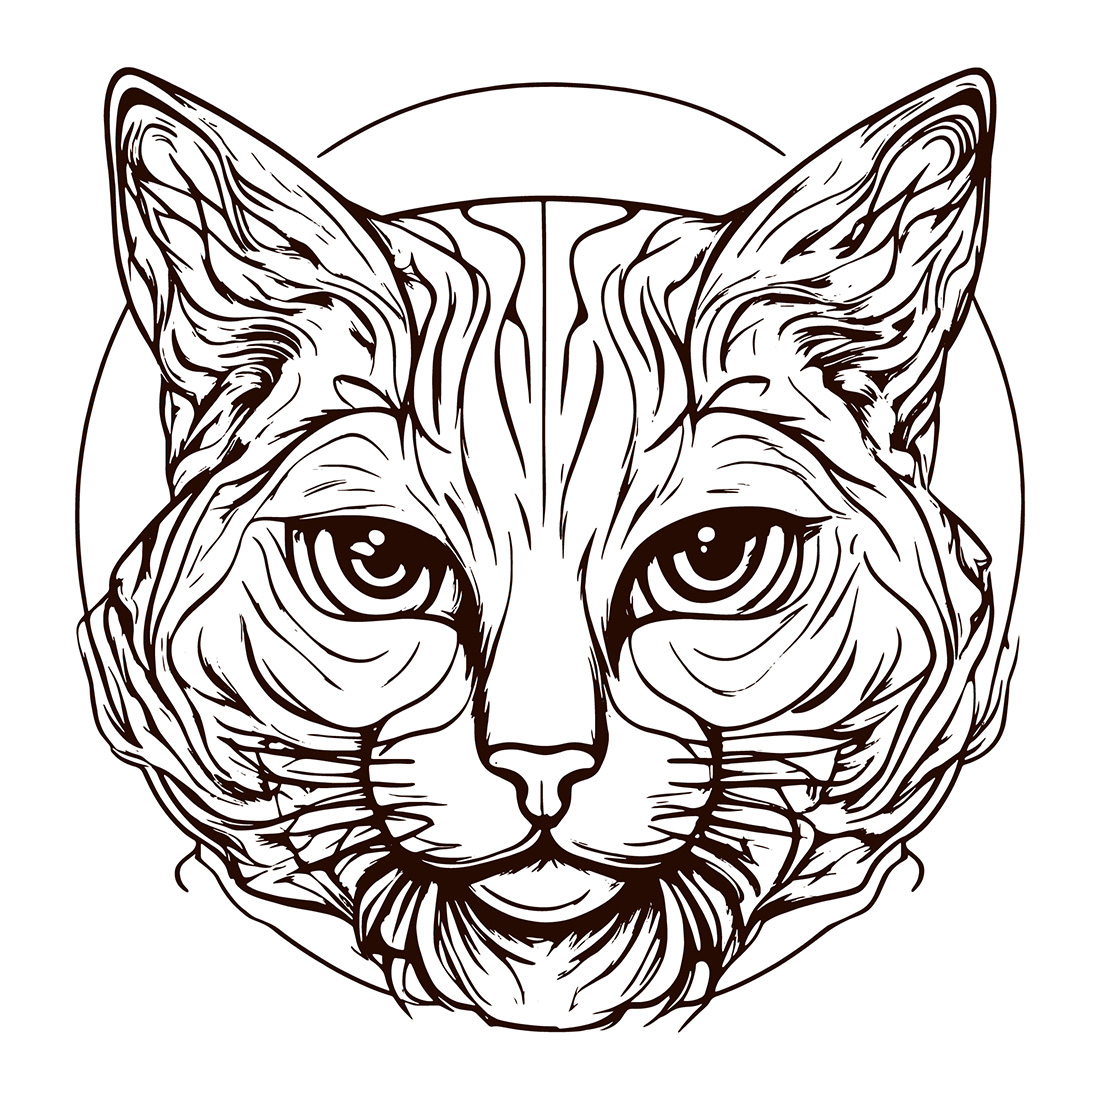 Cat Logo Illustration cover image.